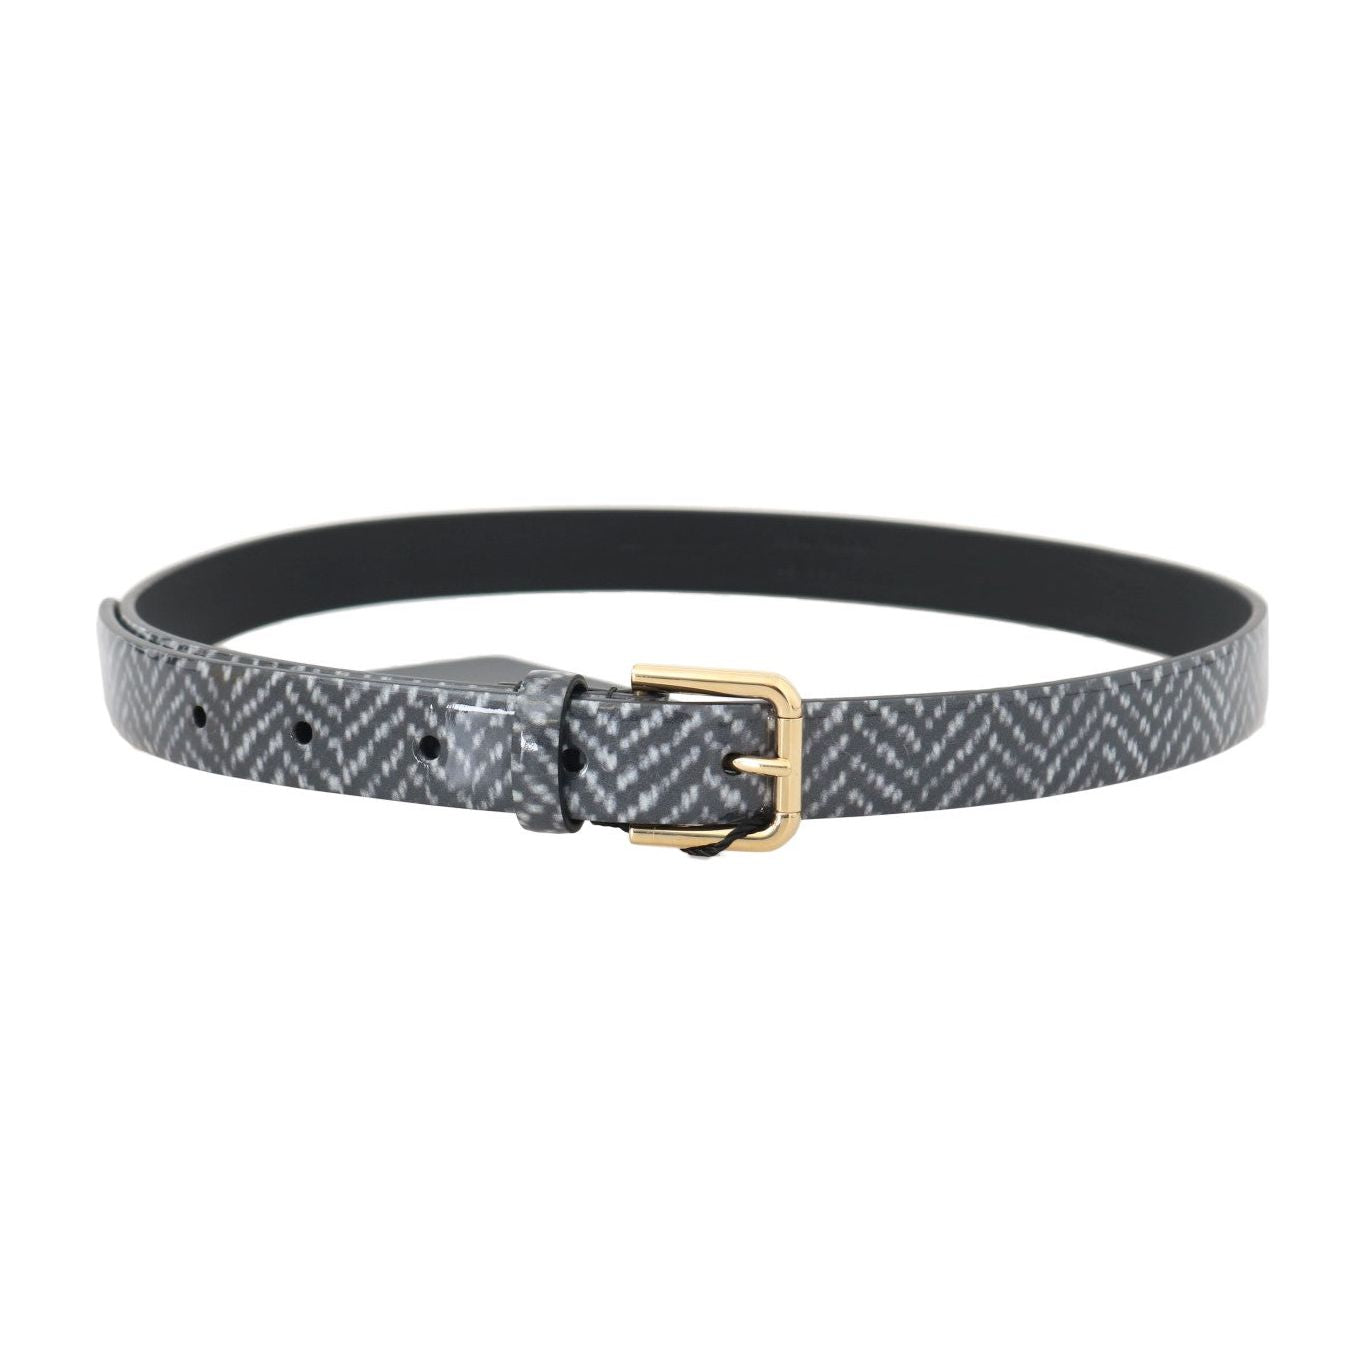 Dolce & Gabbana Elegant Chevron Leather Waist Belt black-white-chevron-pattern-leather-belt Belt 496158-black-white-chevron-pattern-leather-belt-2.jpg